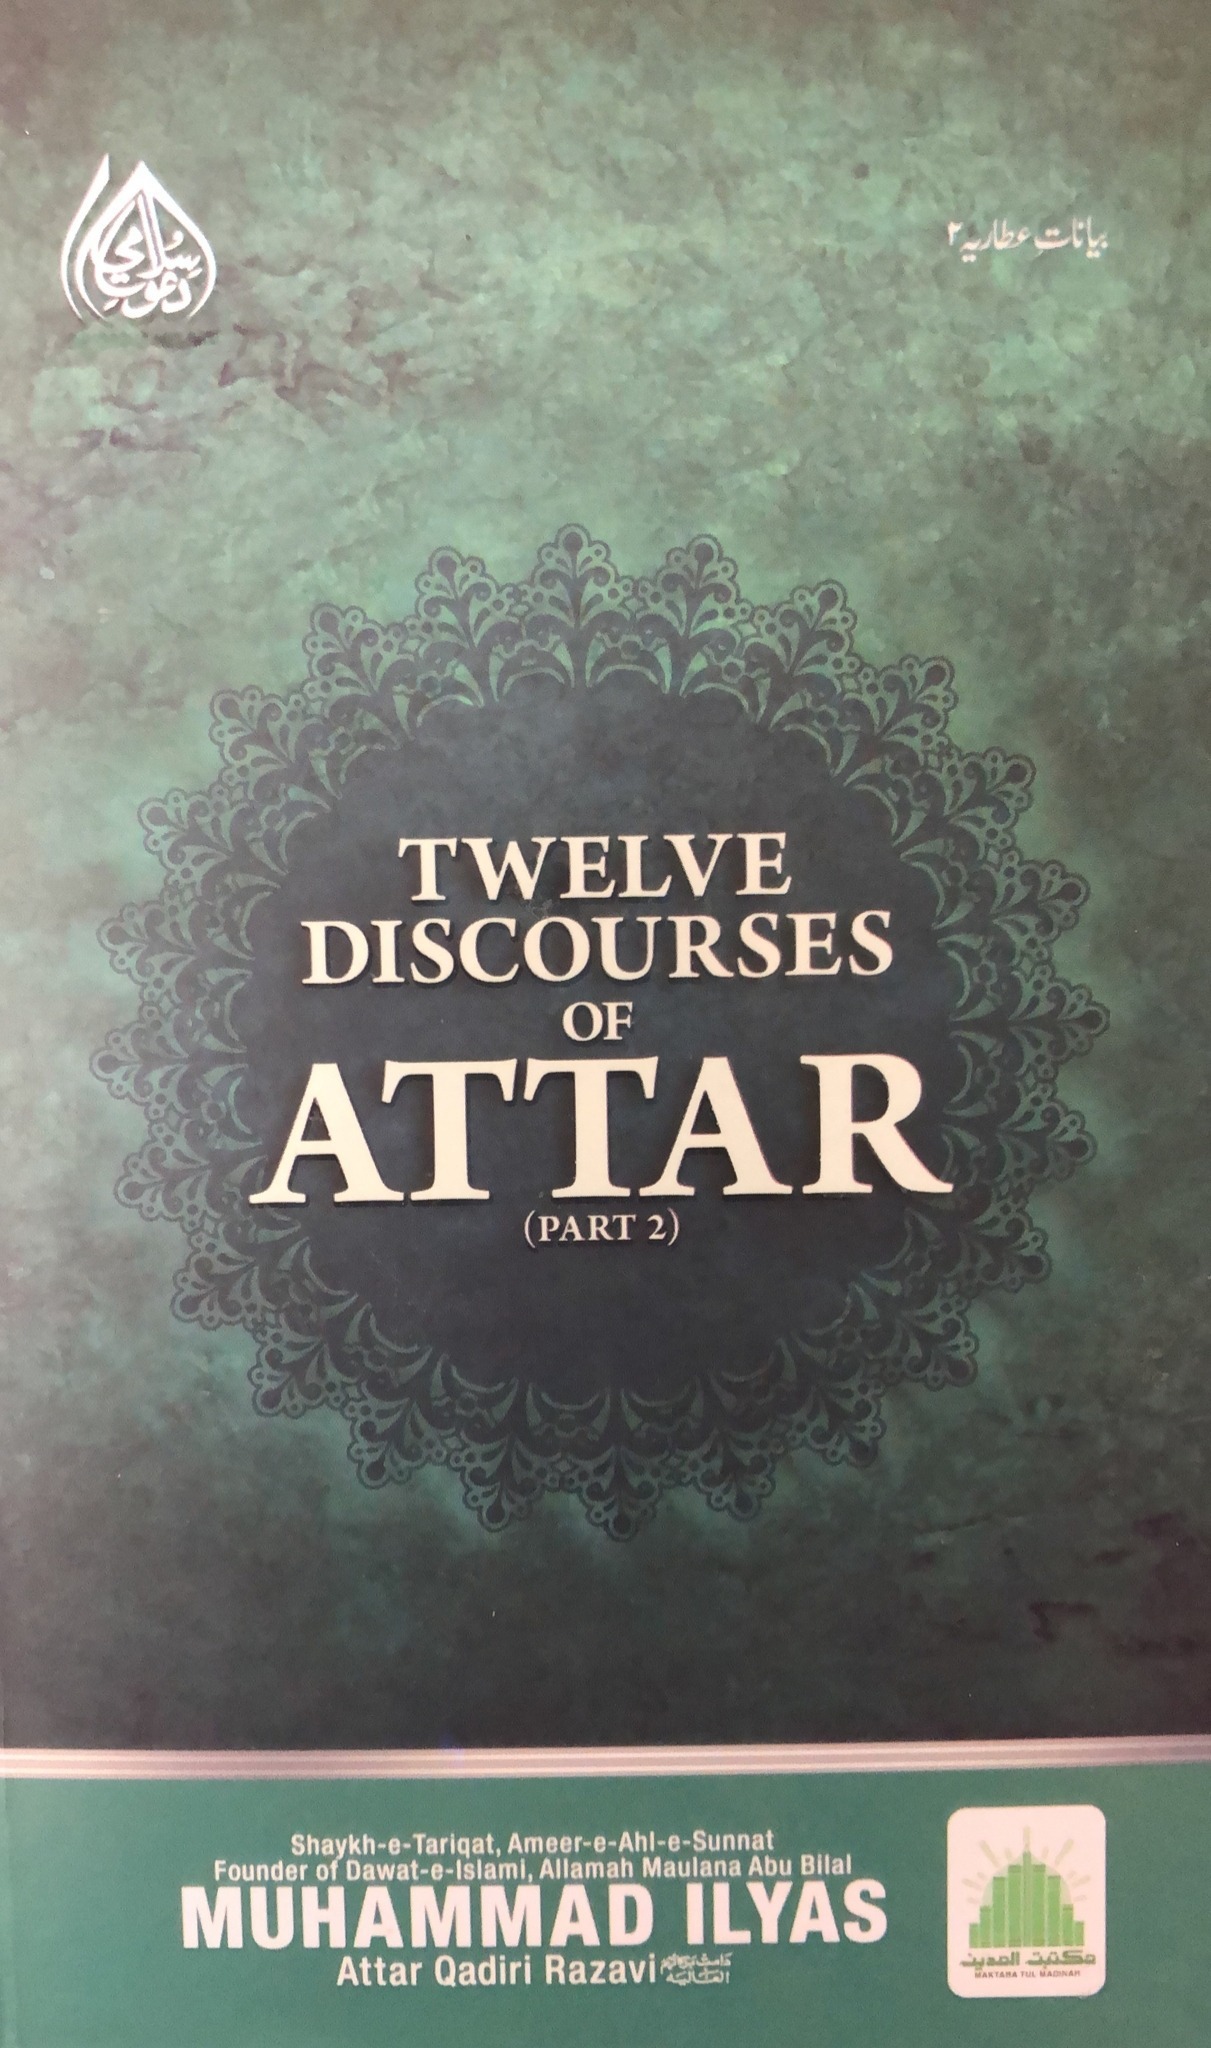 Twelve Discourses of Attar PT 2